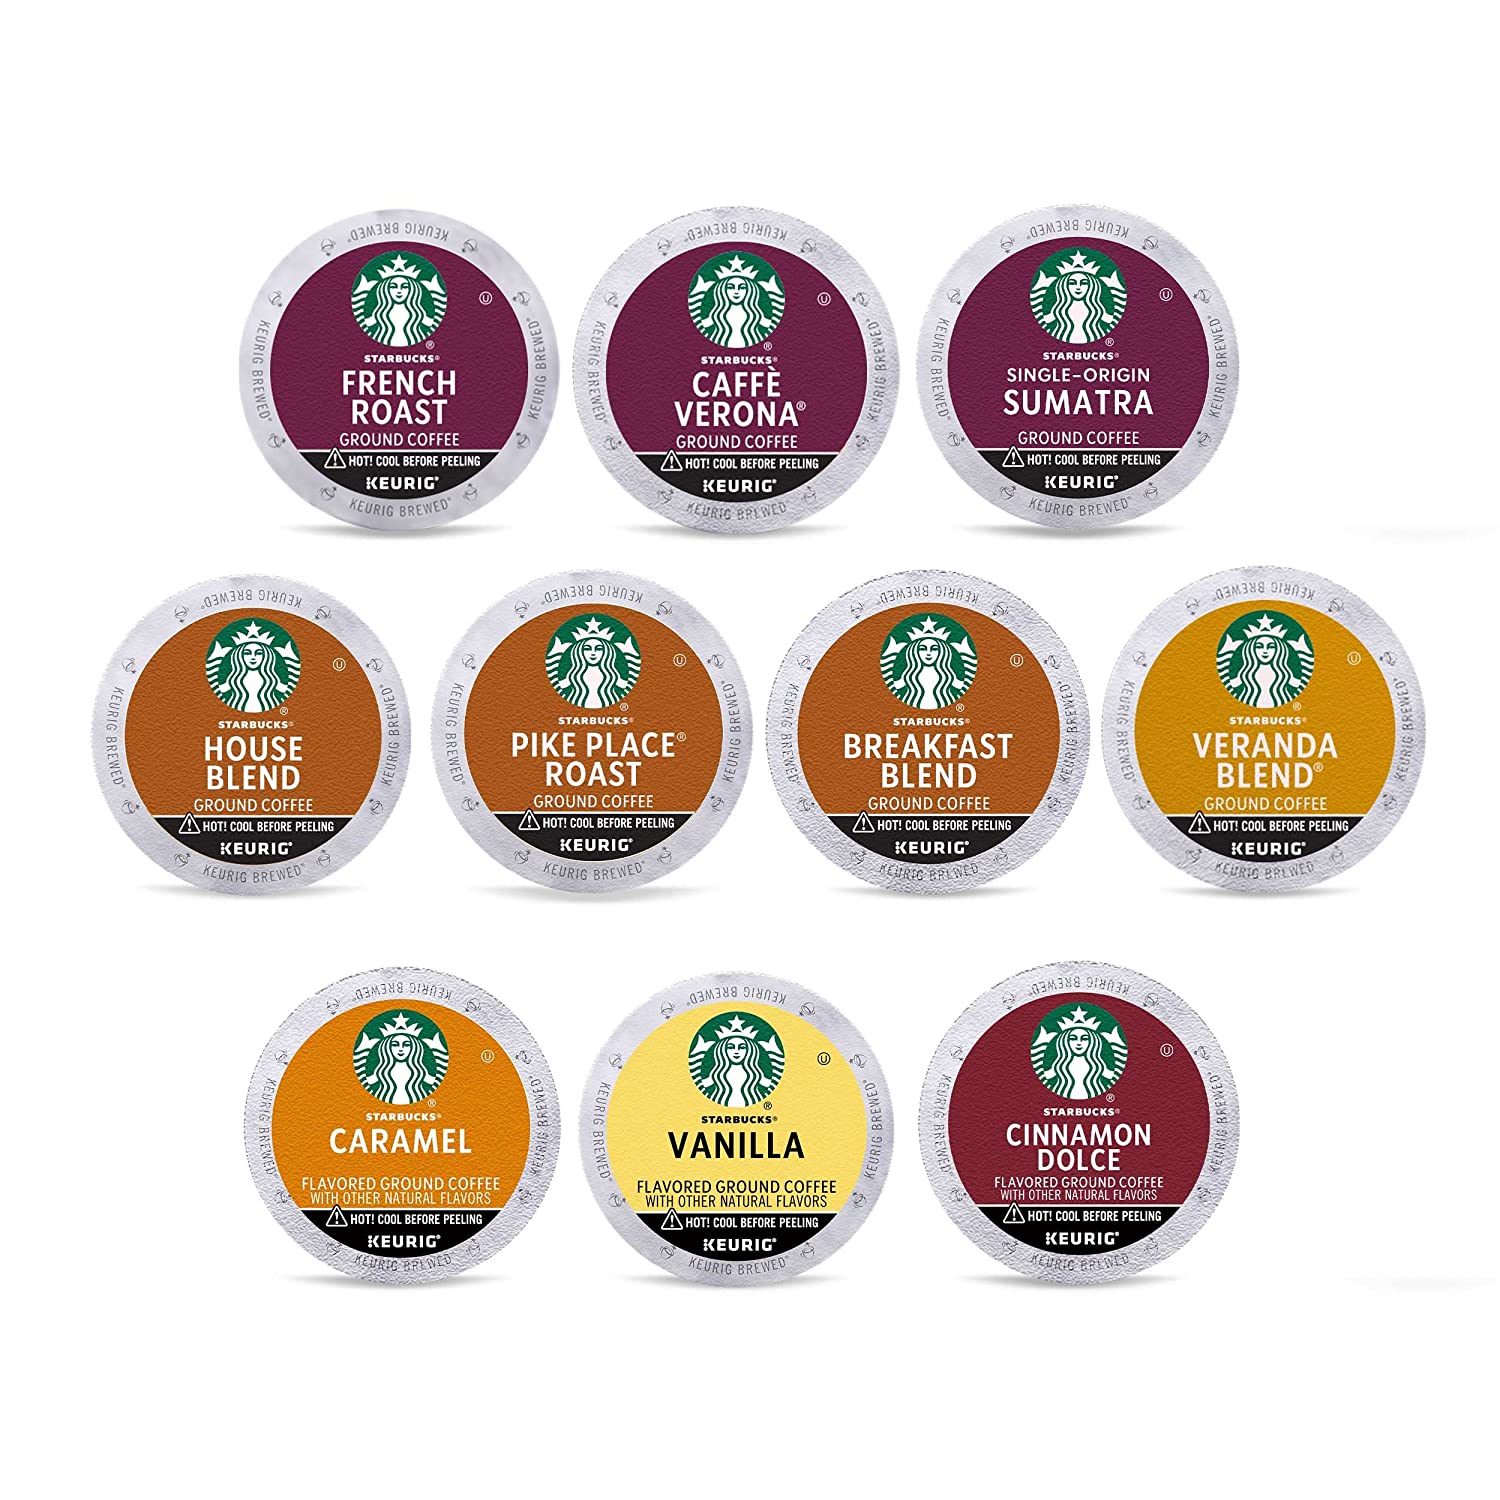 https://discounttoday.net/wp-content/uploads/2022/10/Starbucks-K-Cup-Coffee-Pods-Starbucks-Blonde-Medium-Dark-Roast-Flavored-Coffee-Variety-Pack-for-Keurig-Brewers-1-box-40-pods-total.jpg